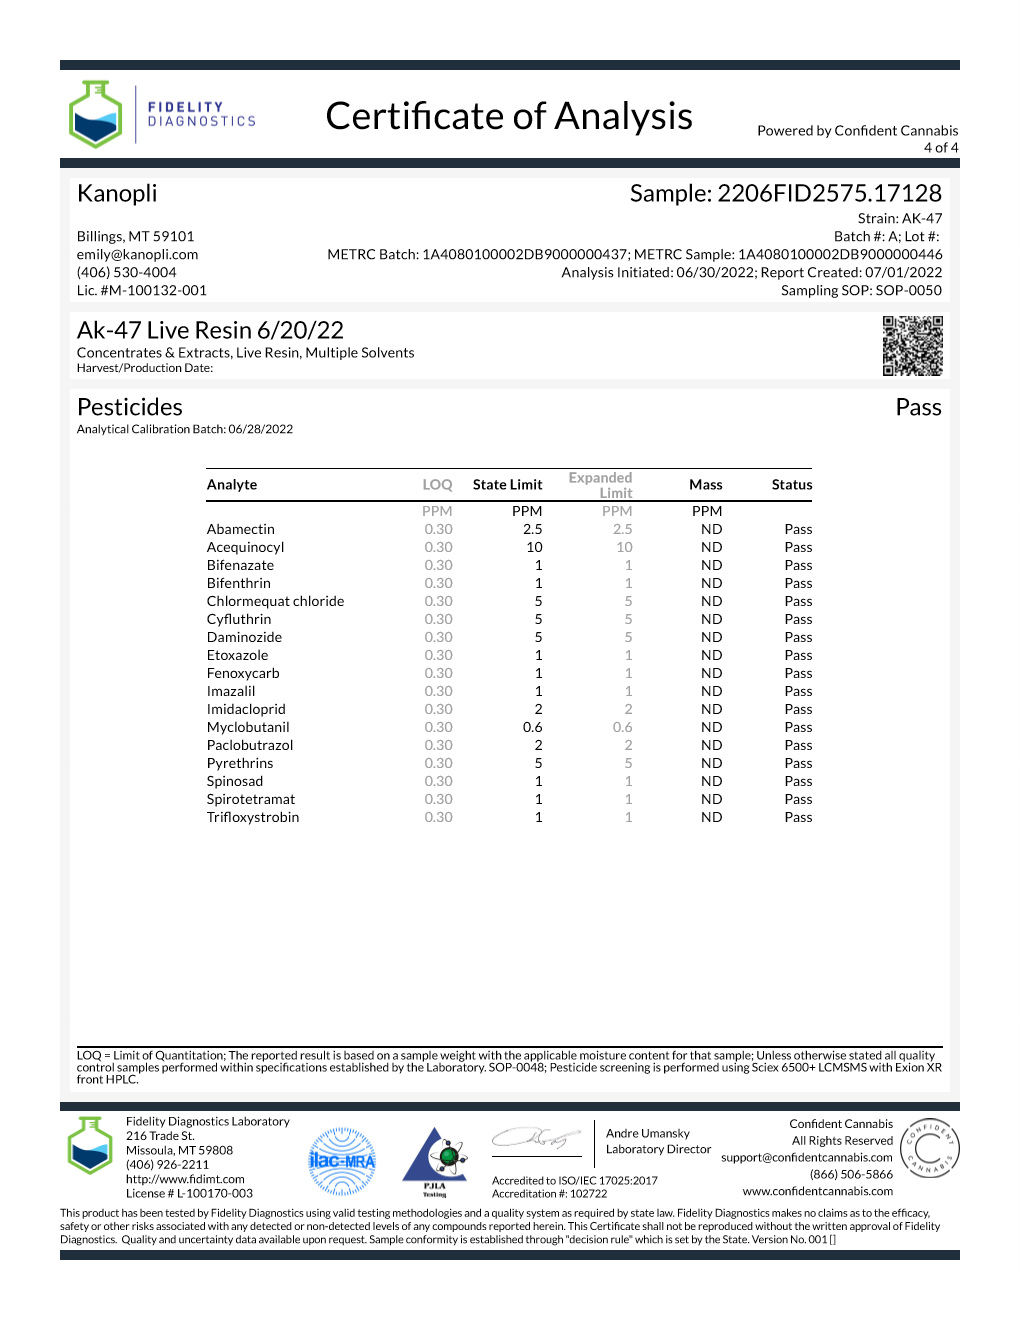 1 gram AK-47 Live Resin (Sativa) 75.49% THC 6/2022